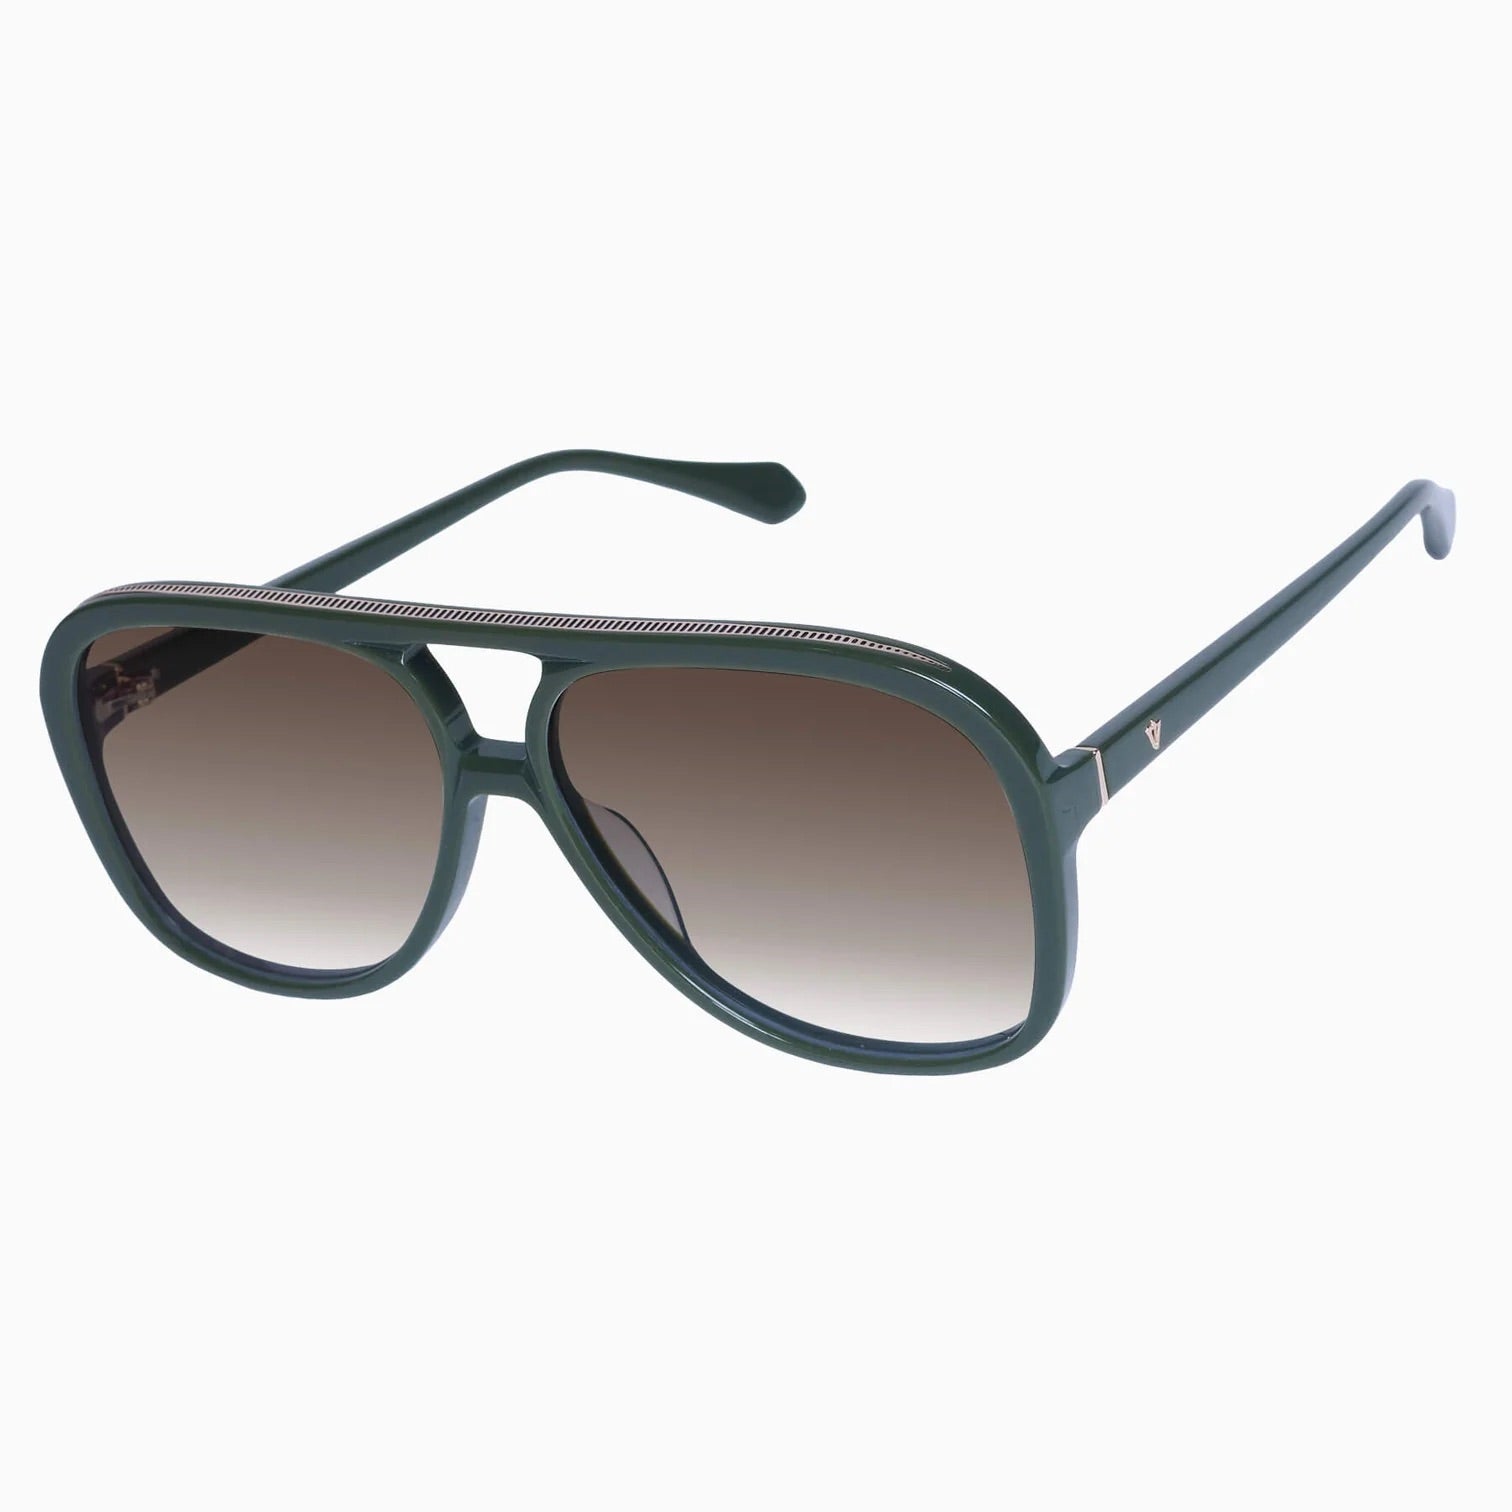 Bang | Sunglasses - Army Green w. Gold Metal / Brown Gradient Lens